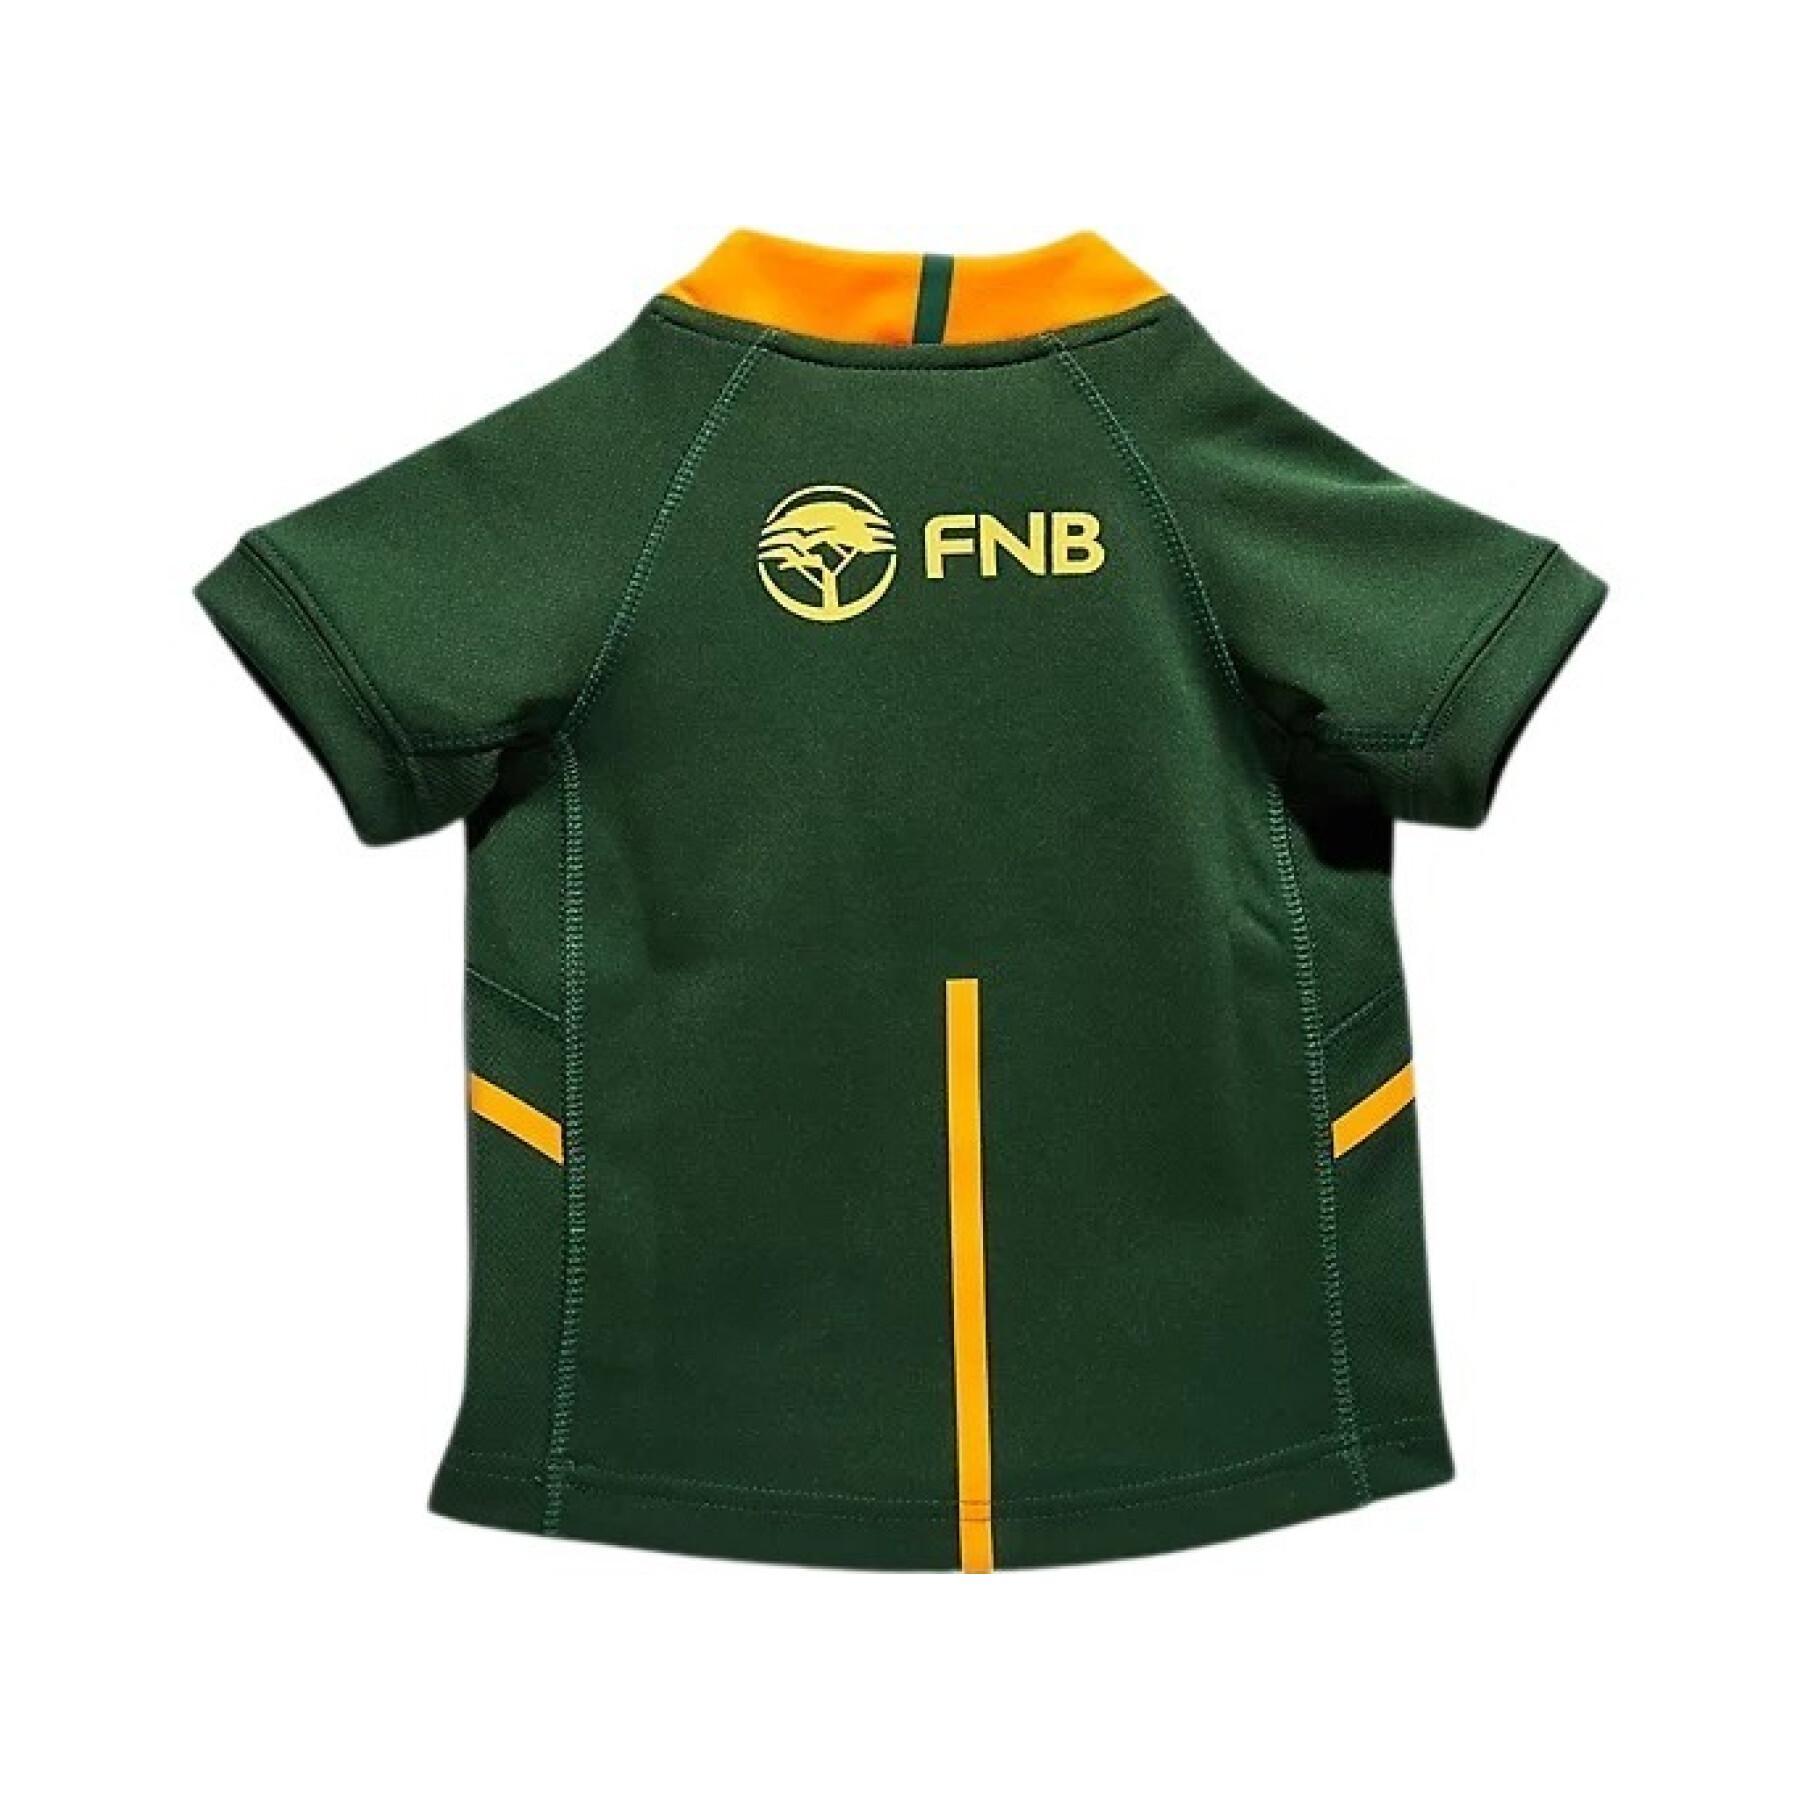 Camiseta de niño Sudáfrica Springboks